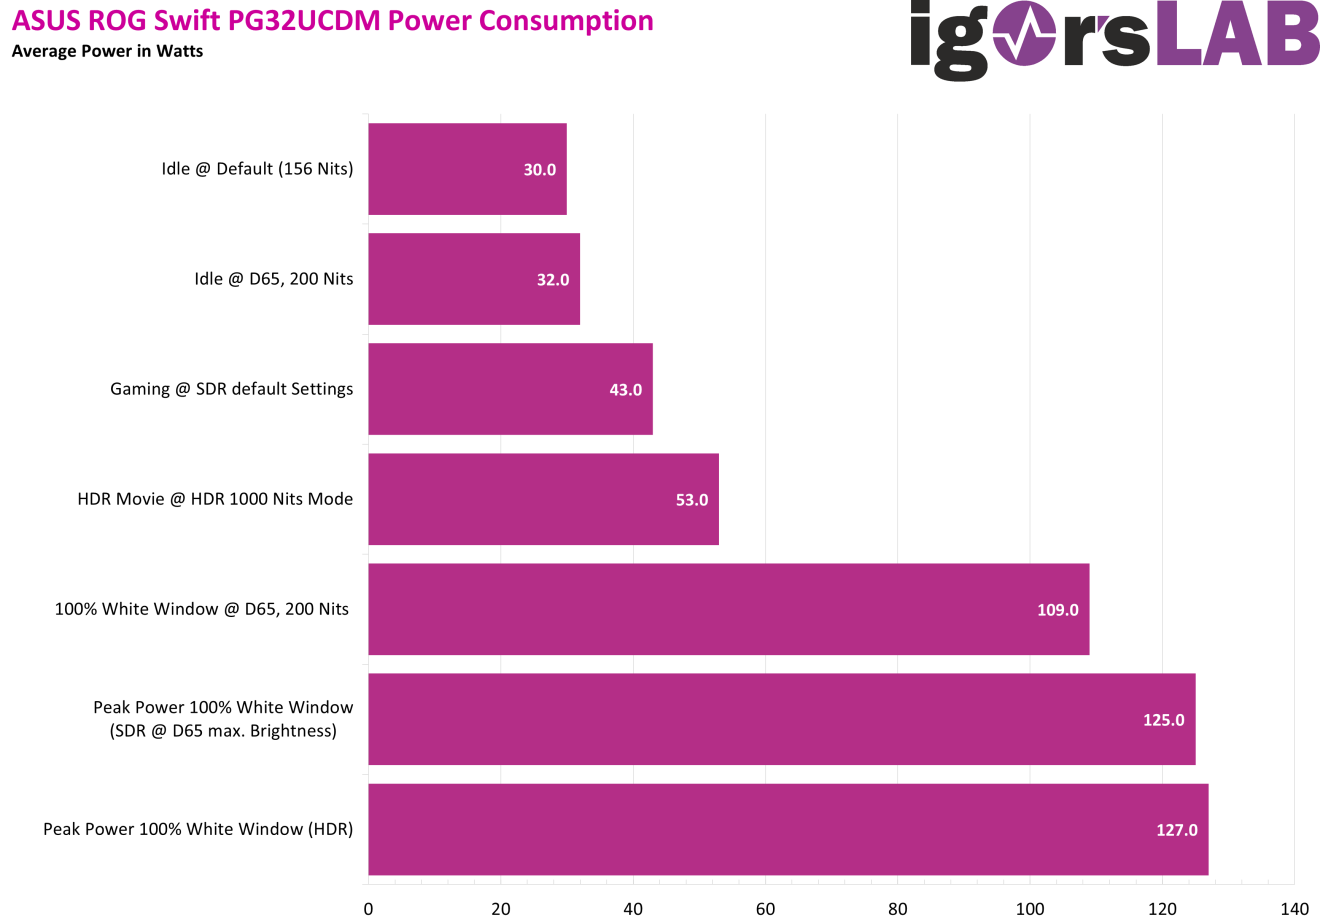 Power-Consumption-1320x924.png